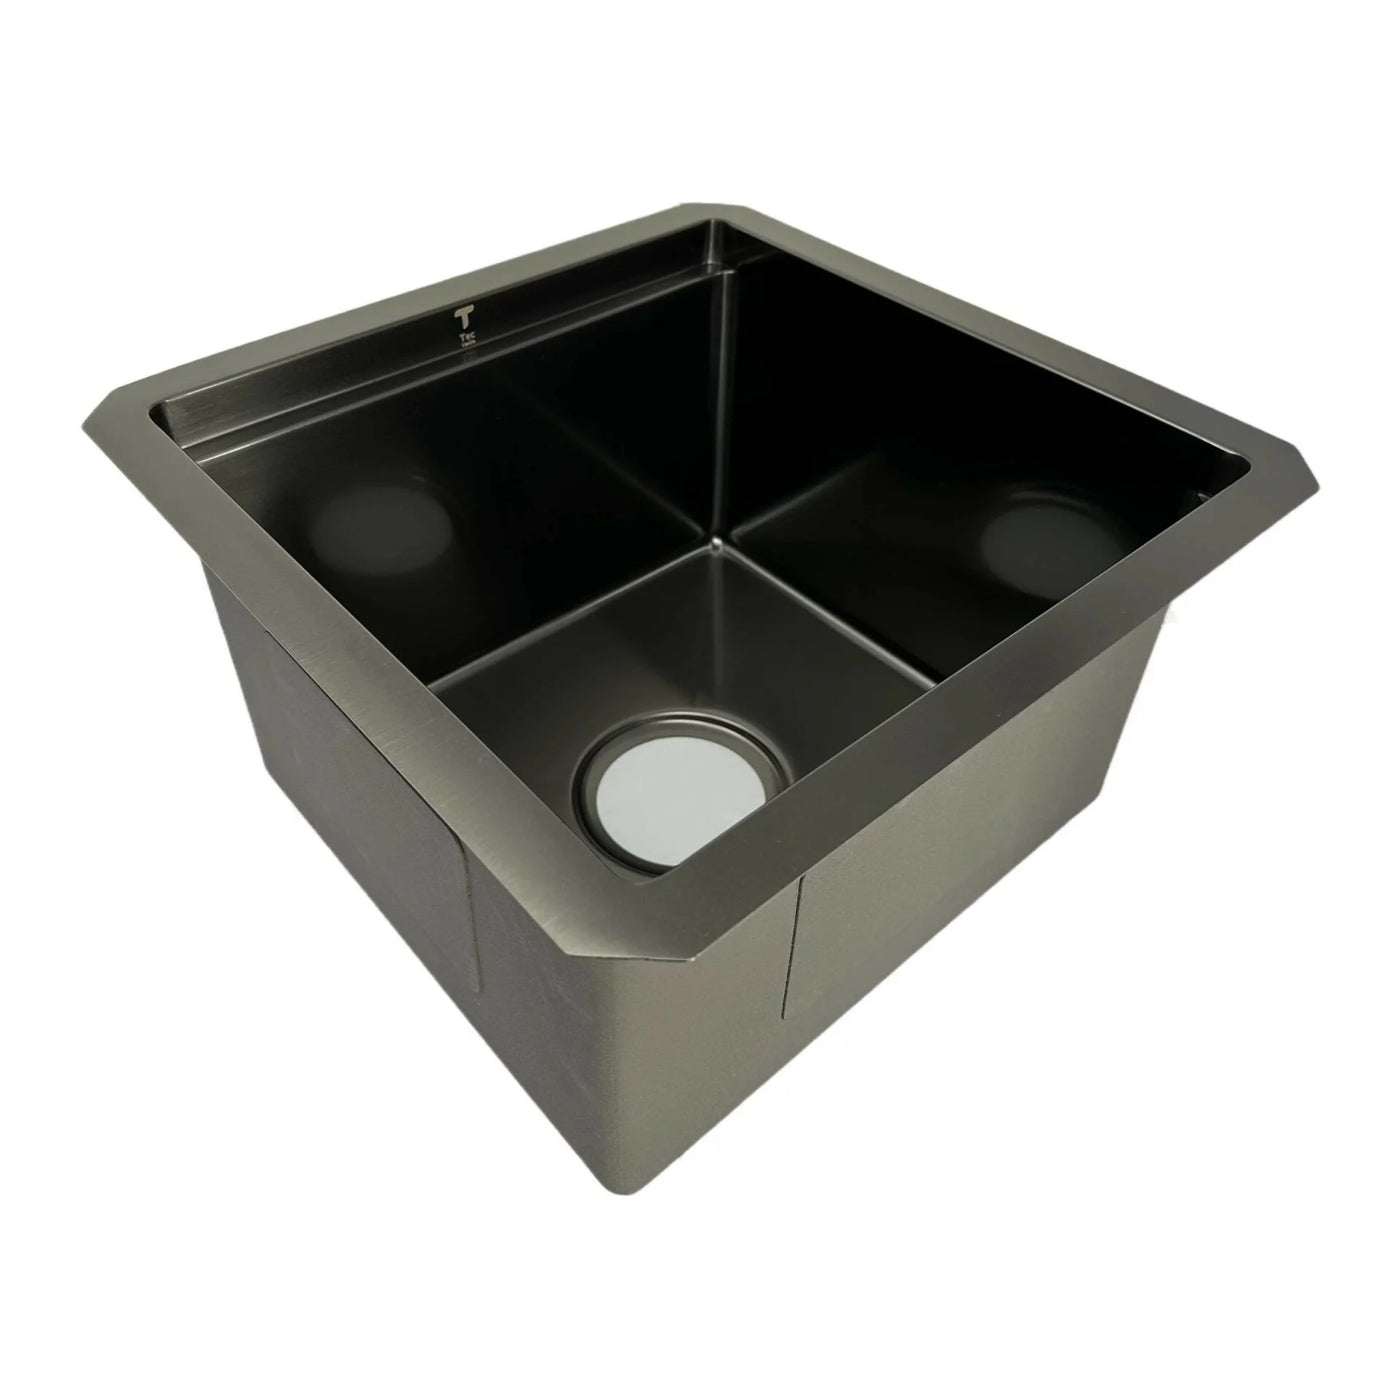 Tec Vanlife Matte Black Stainless Steel Nanotech Galley Sink - 15" x 15" Kitchen Sink - Upgraded Version